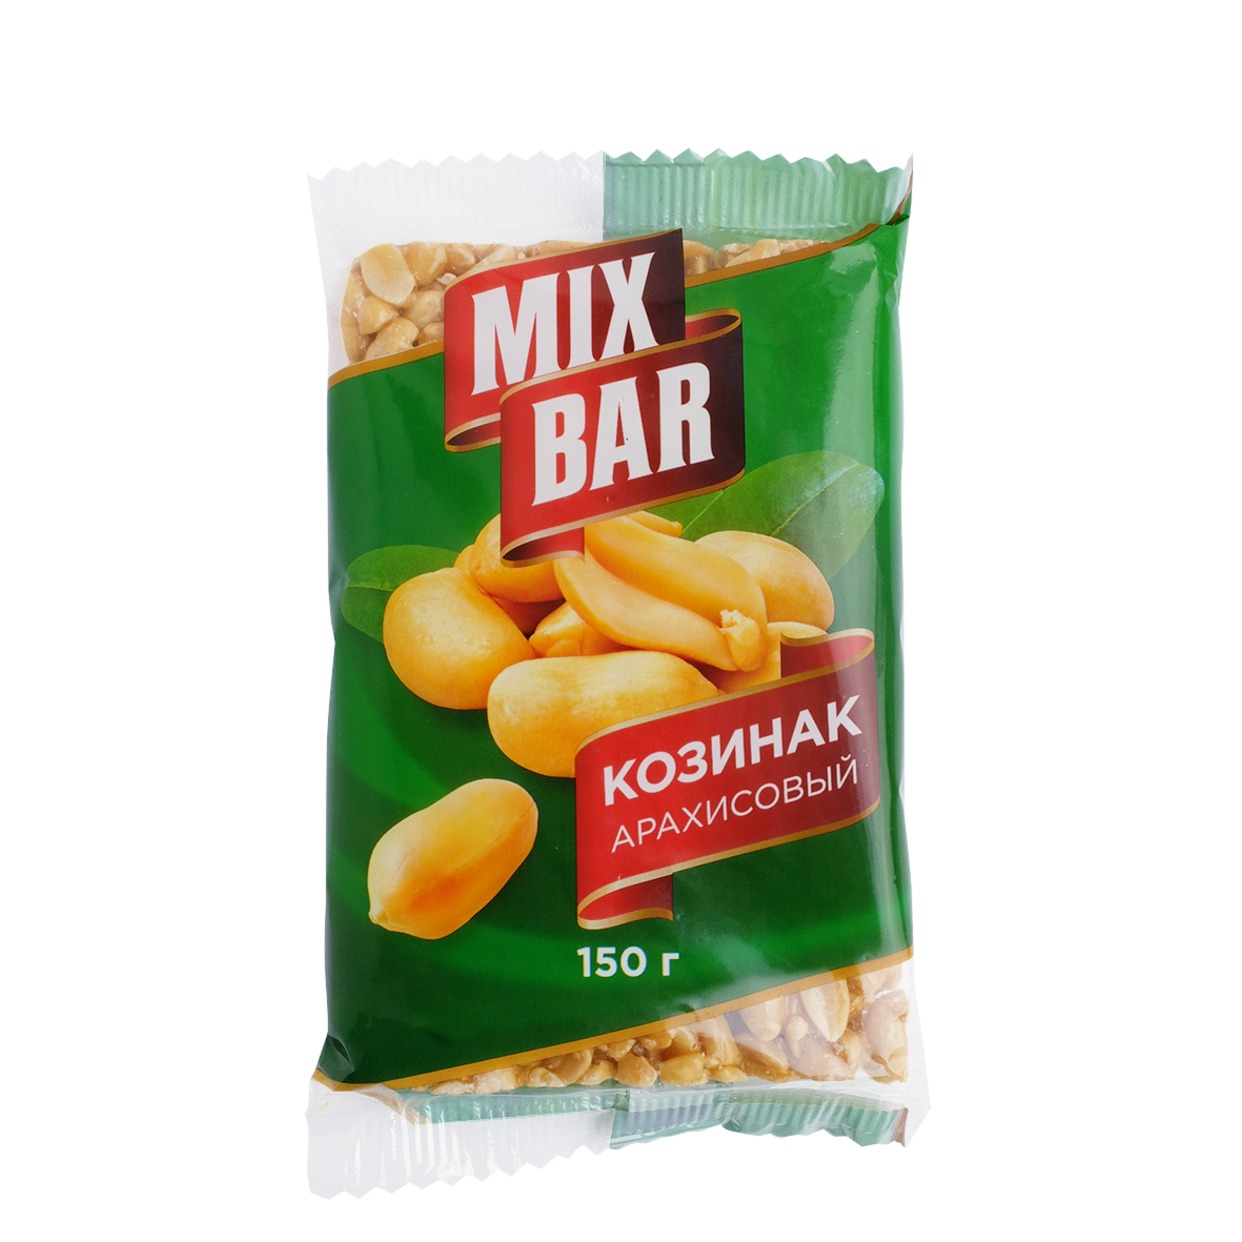 MIXBAR Козинак арахисовый 150г